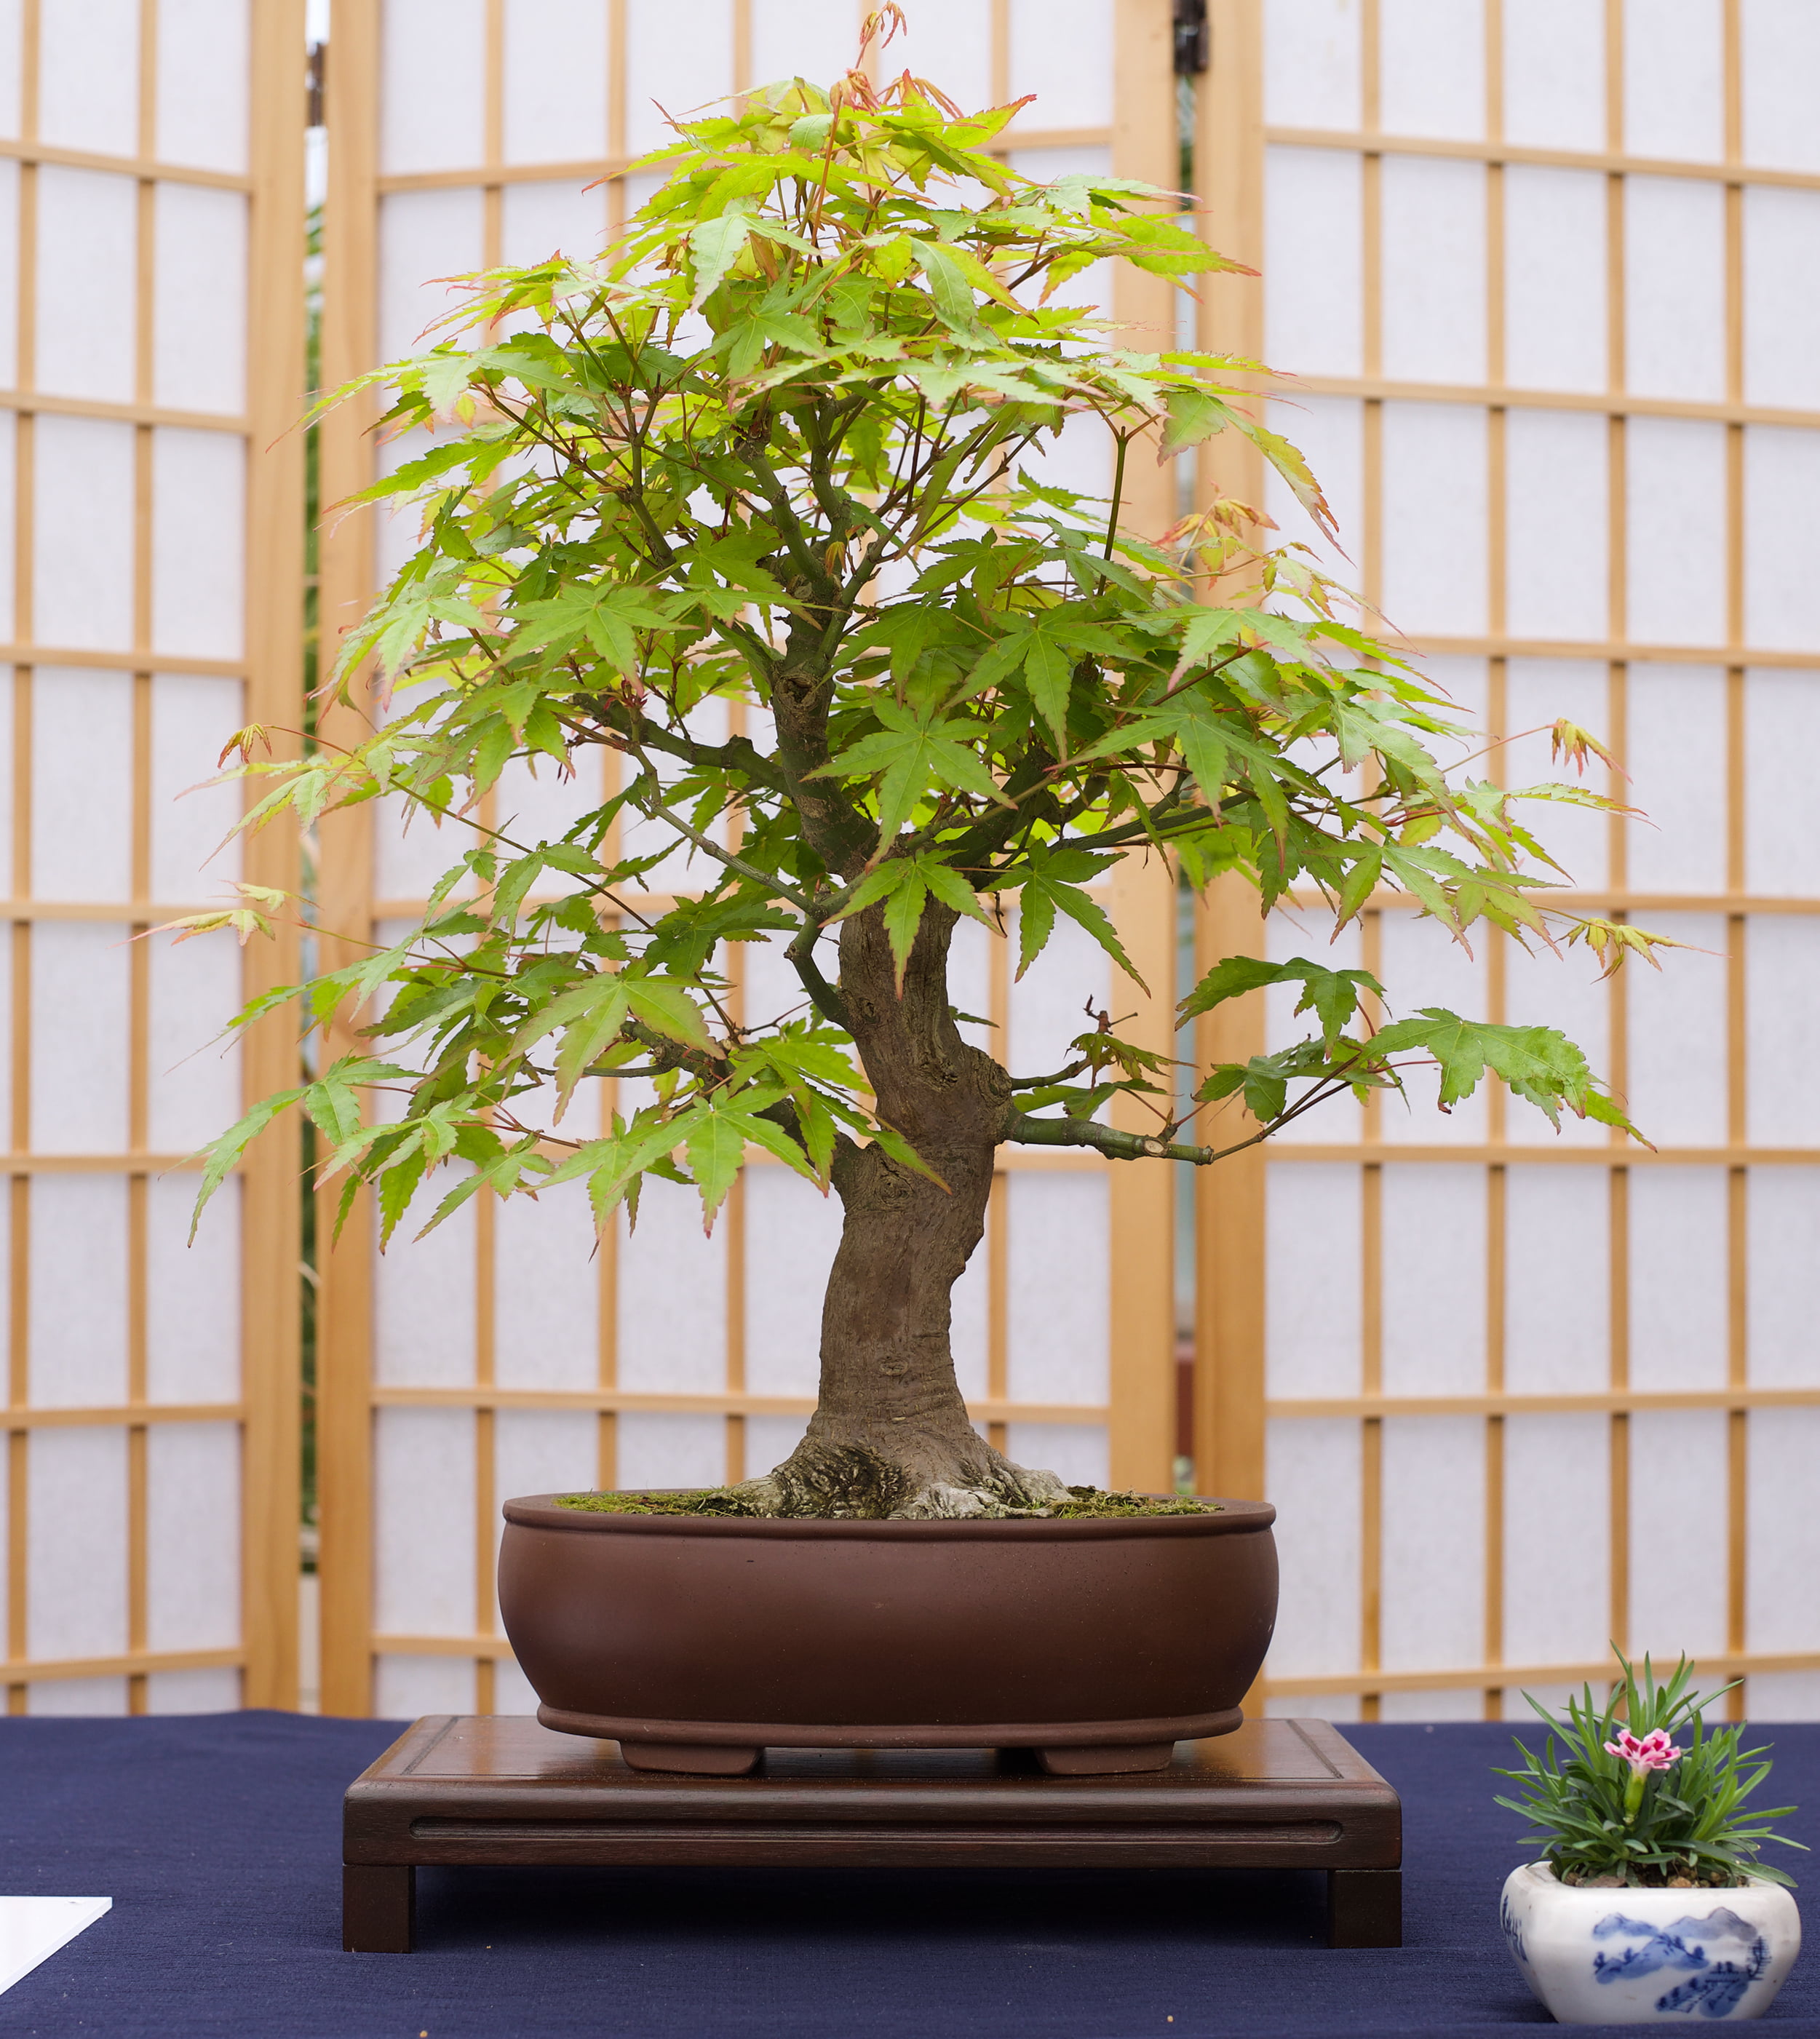 Master Bonsai Kit - Bonsai Plant Growing Kit - Professional Growing and  Styling Bonsai Set - Japanese Bonsai - Become Bonsai Master - Ideal Bonsai